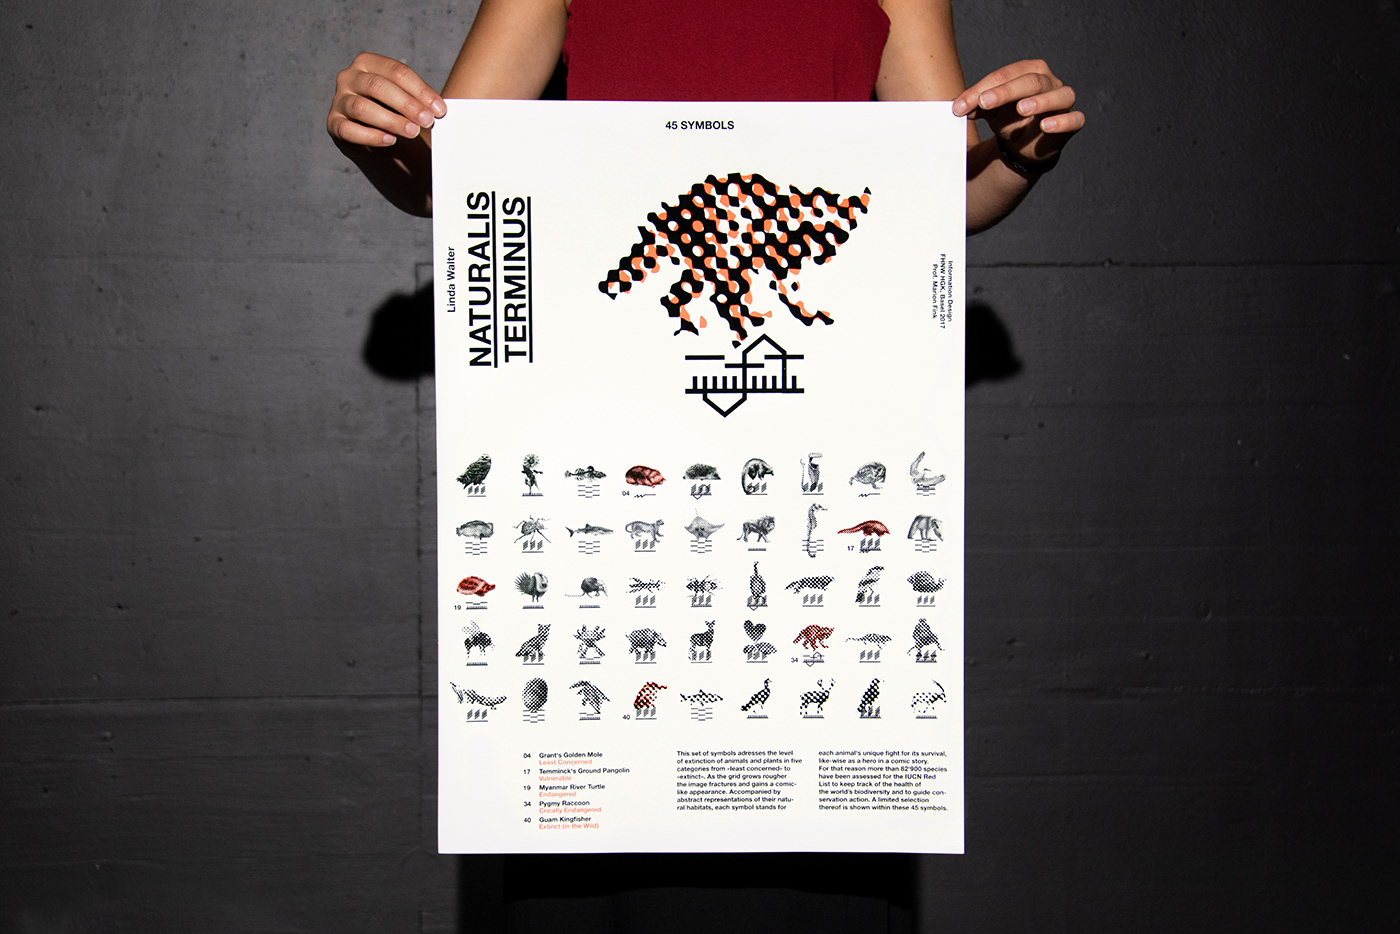 informationsdesign 45symbols animal extinct poster symbols natur habitat raster Disappear